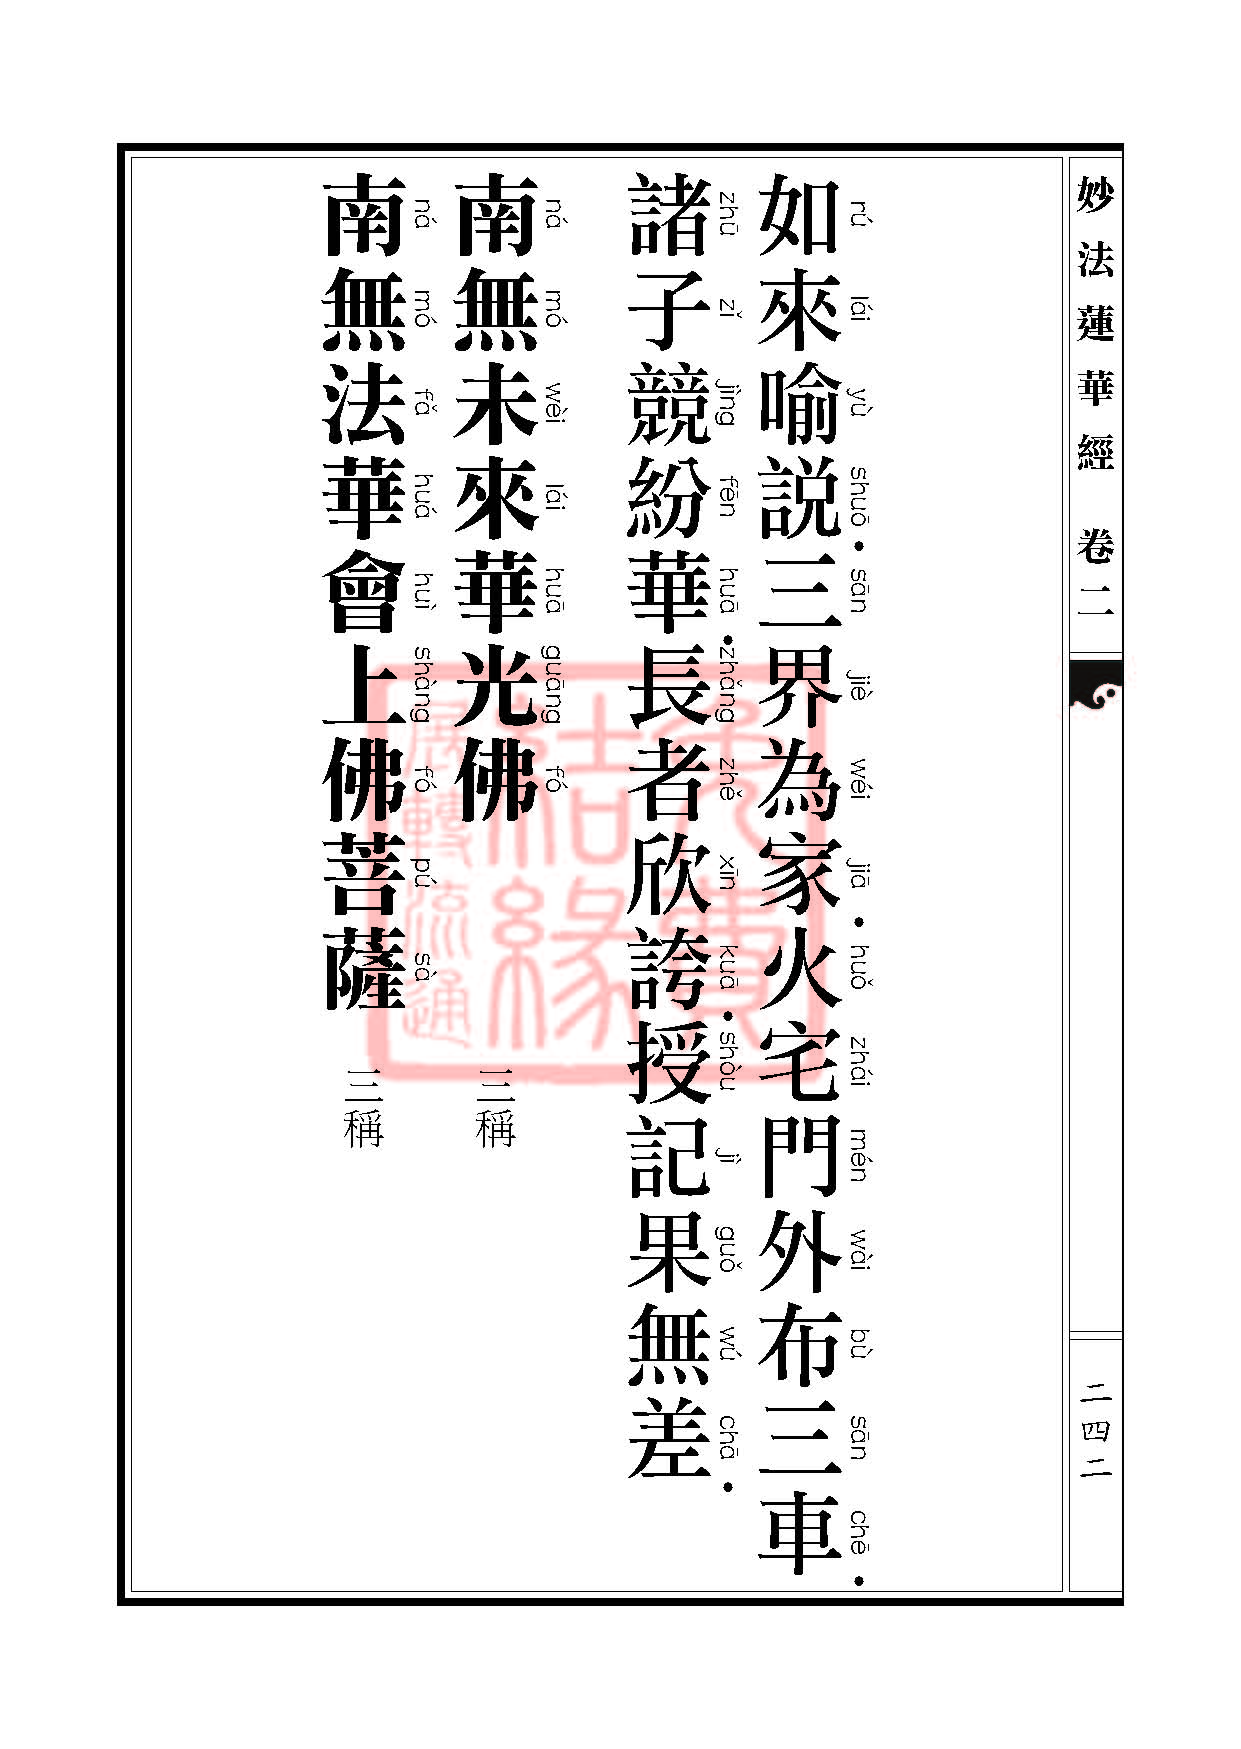 Book_FHJ_HK-A6-PY_Web_ҳ_242.jpg